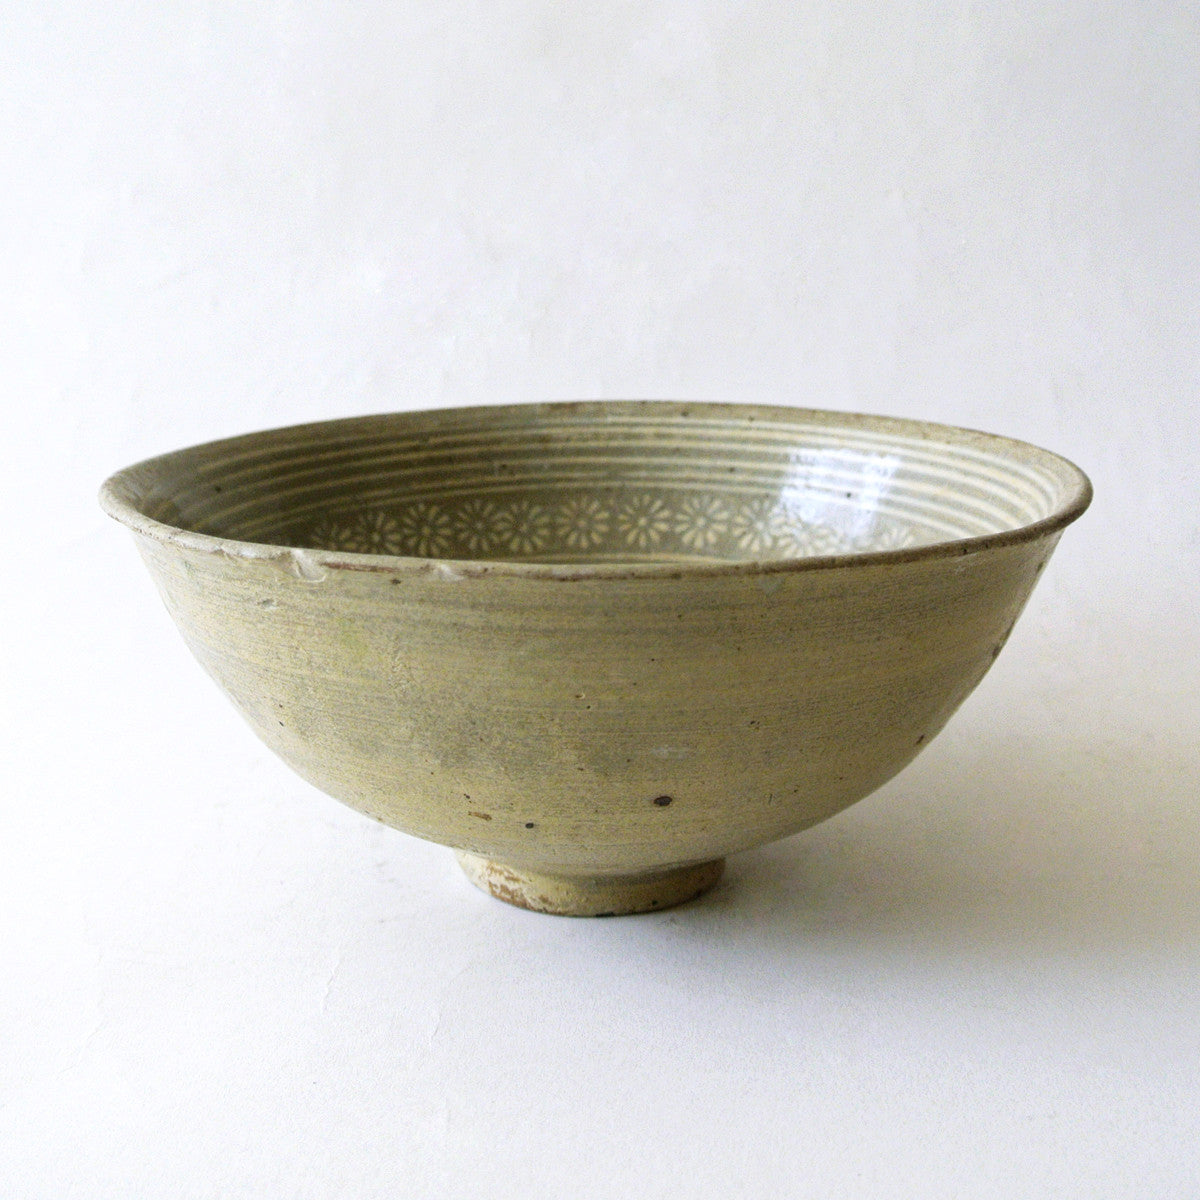 Chosun Inlaid Flower Design Bunchung Bowl